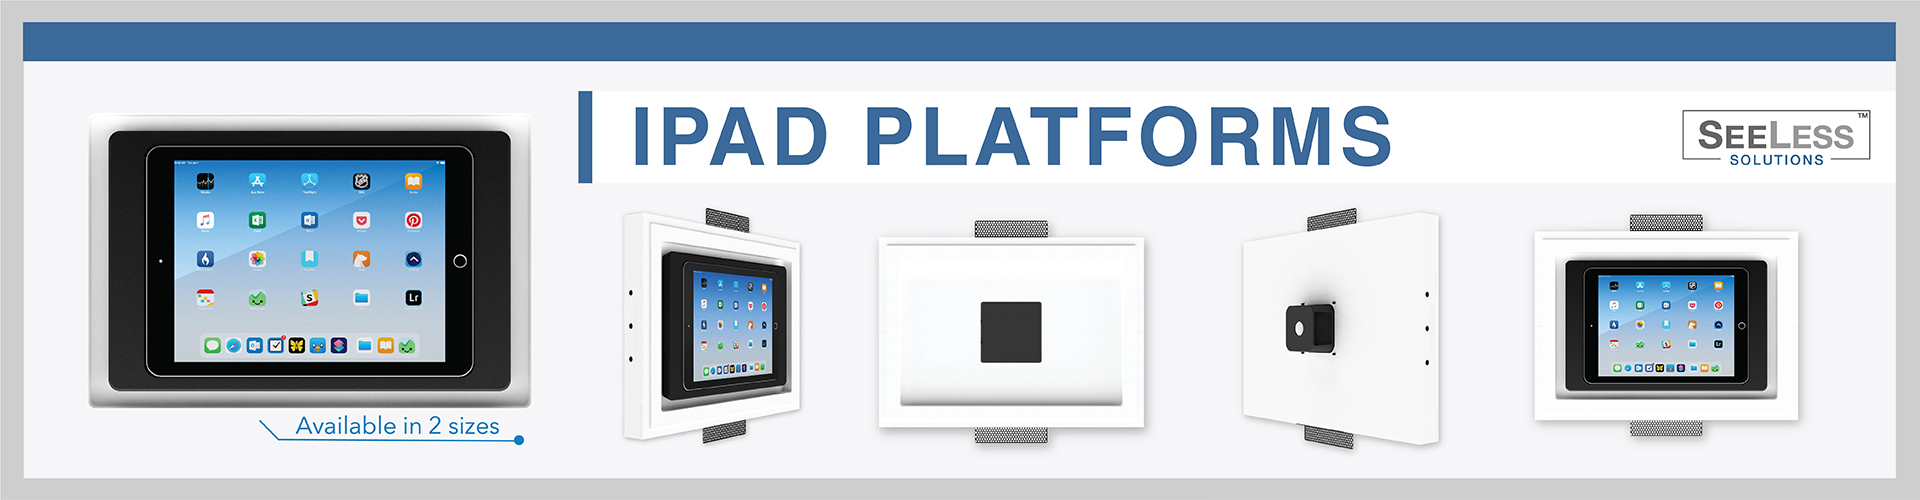 iPad Wall Mud-In Platforms